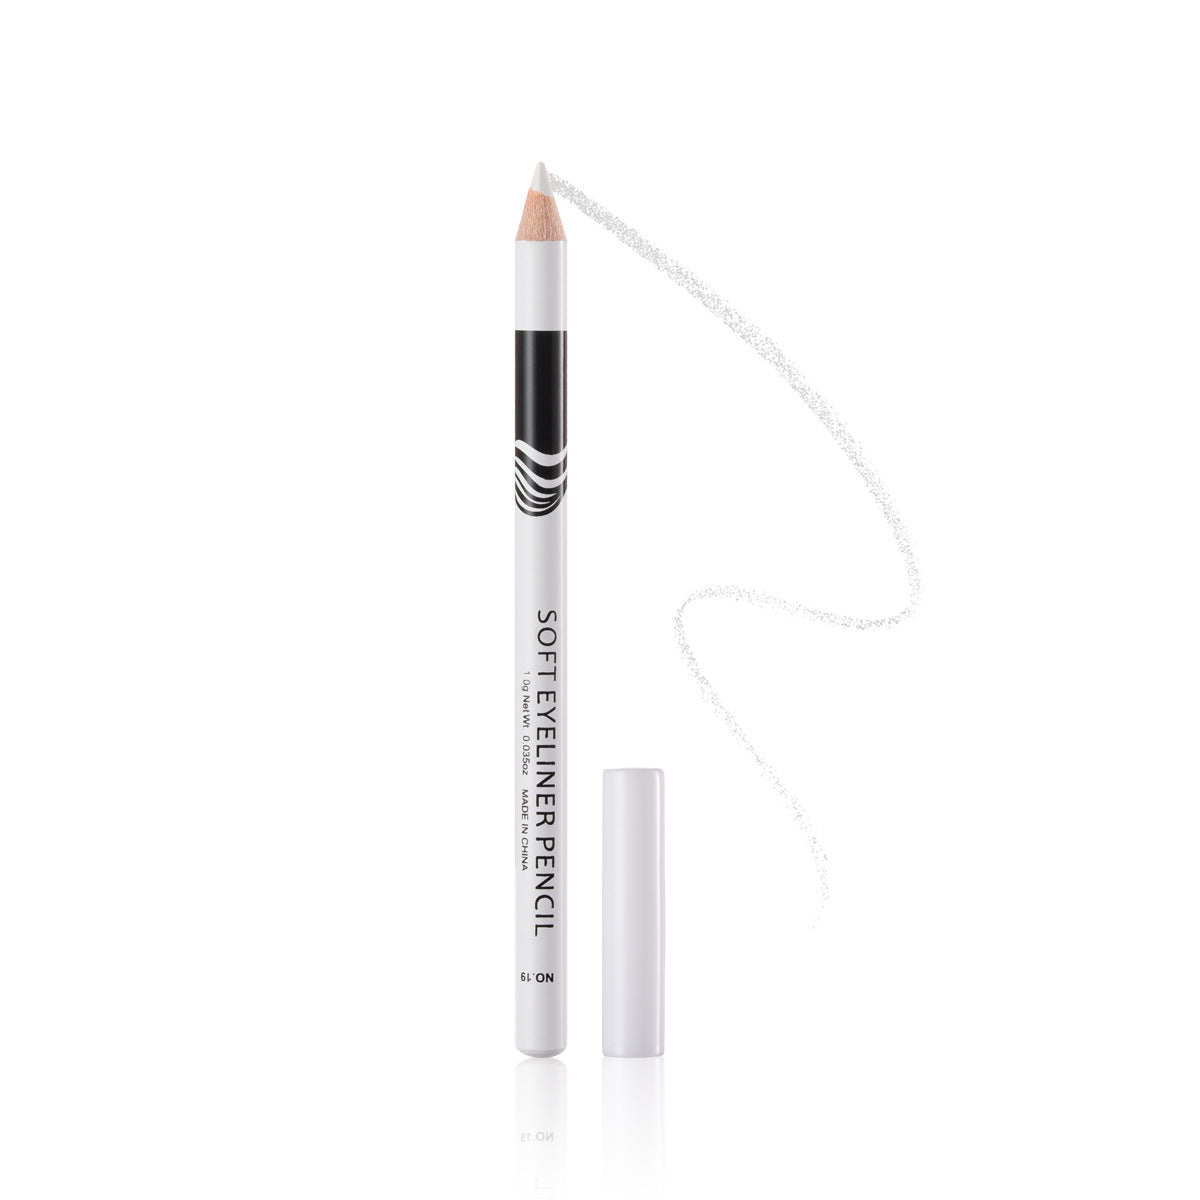 Set of 12 White Water-Repellent Precise Eyeliner Pencils for Eyes